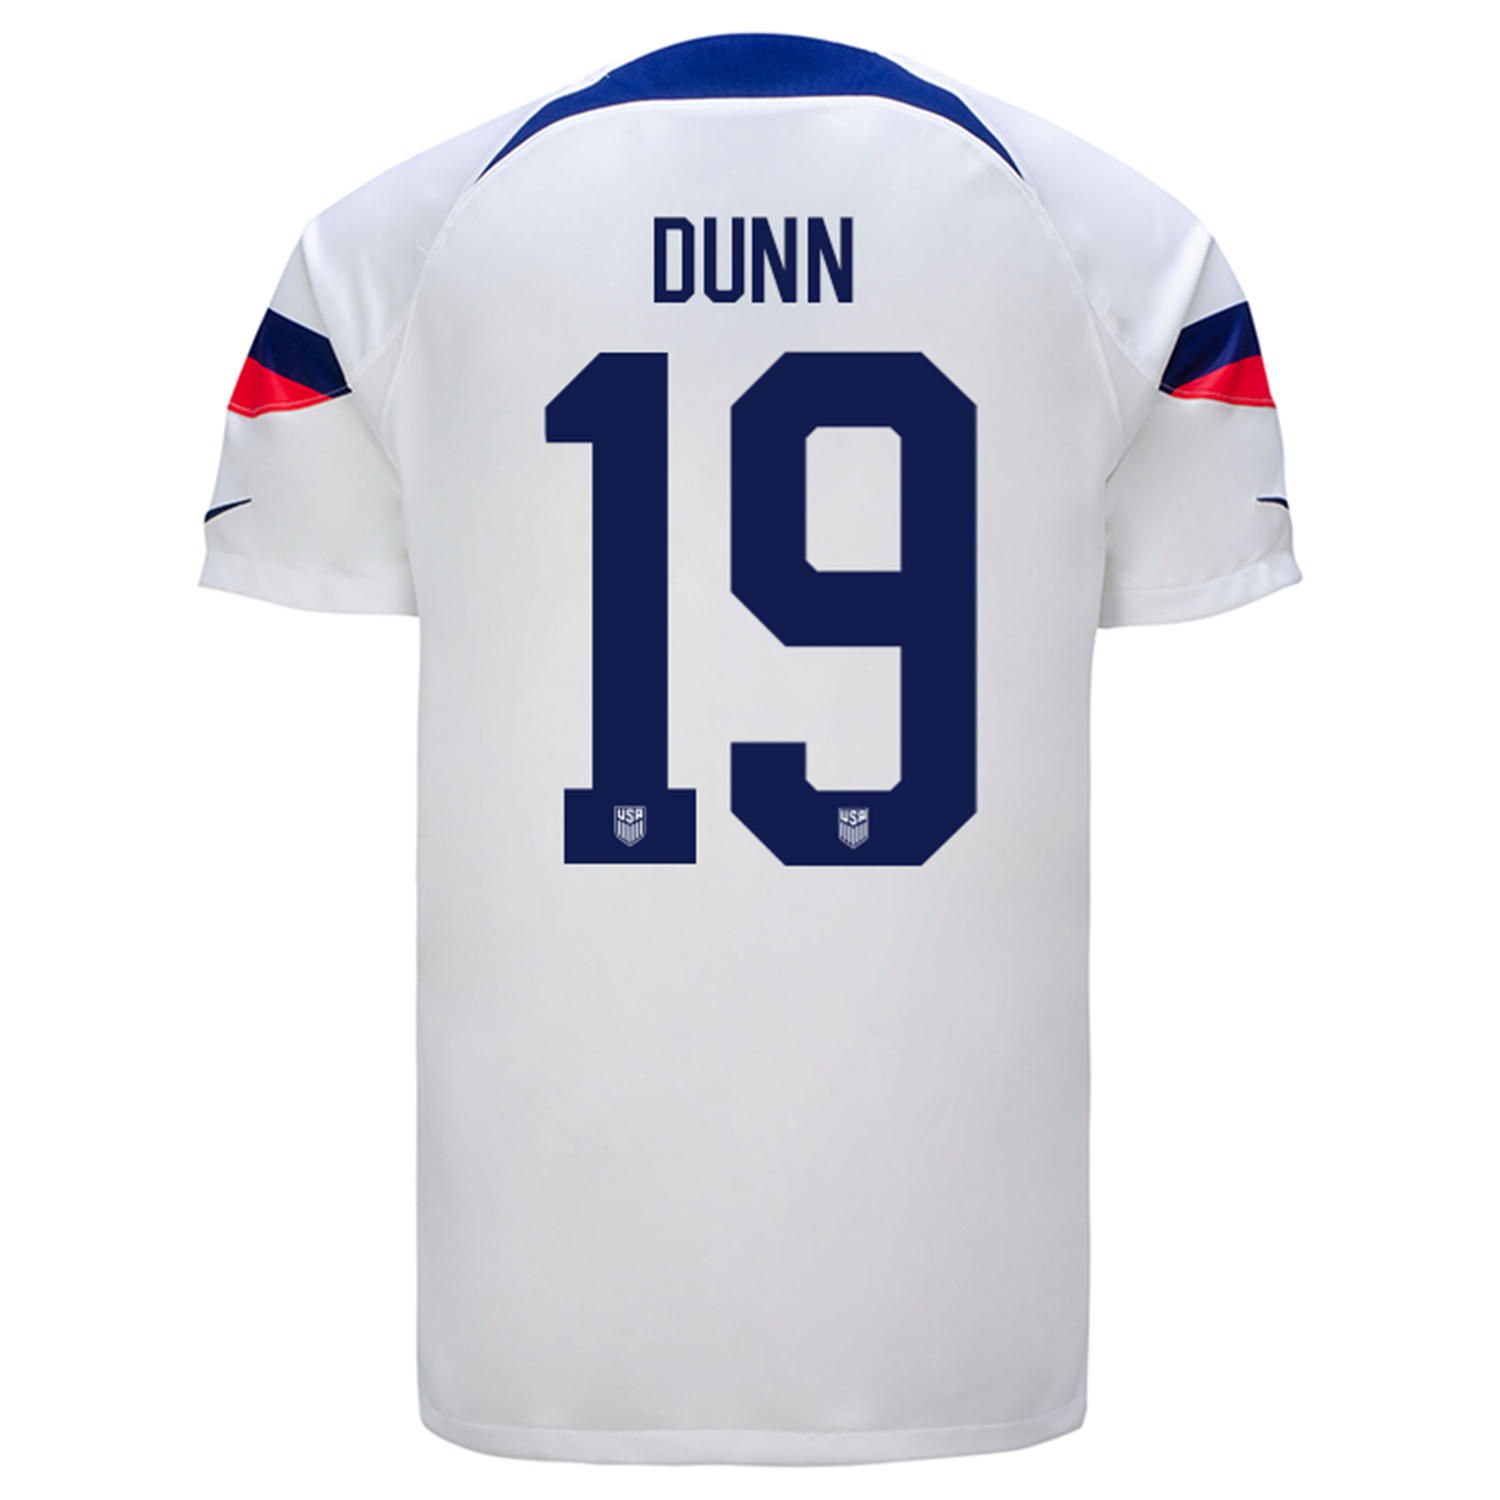 Dunn 19 Men's USWNT Jersey - Official U.S. Soccer Store